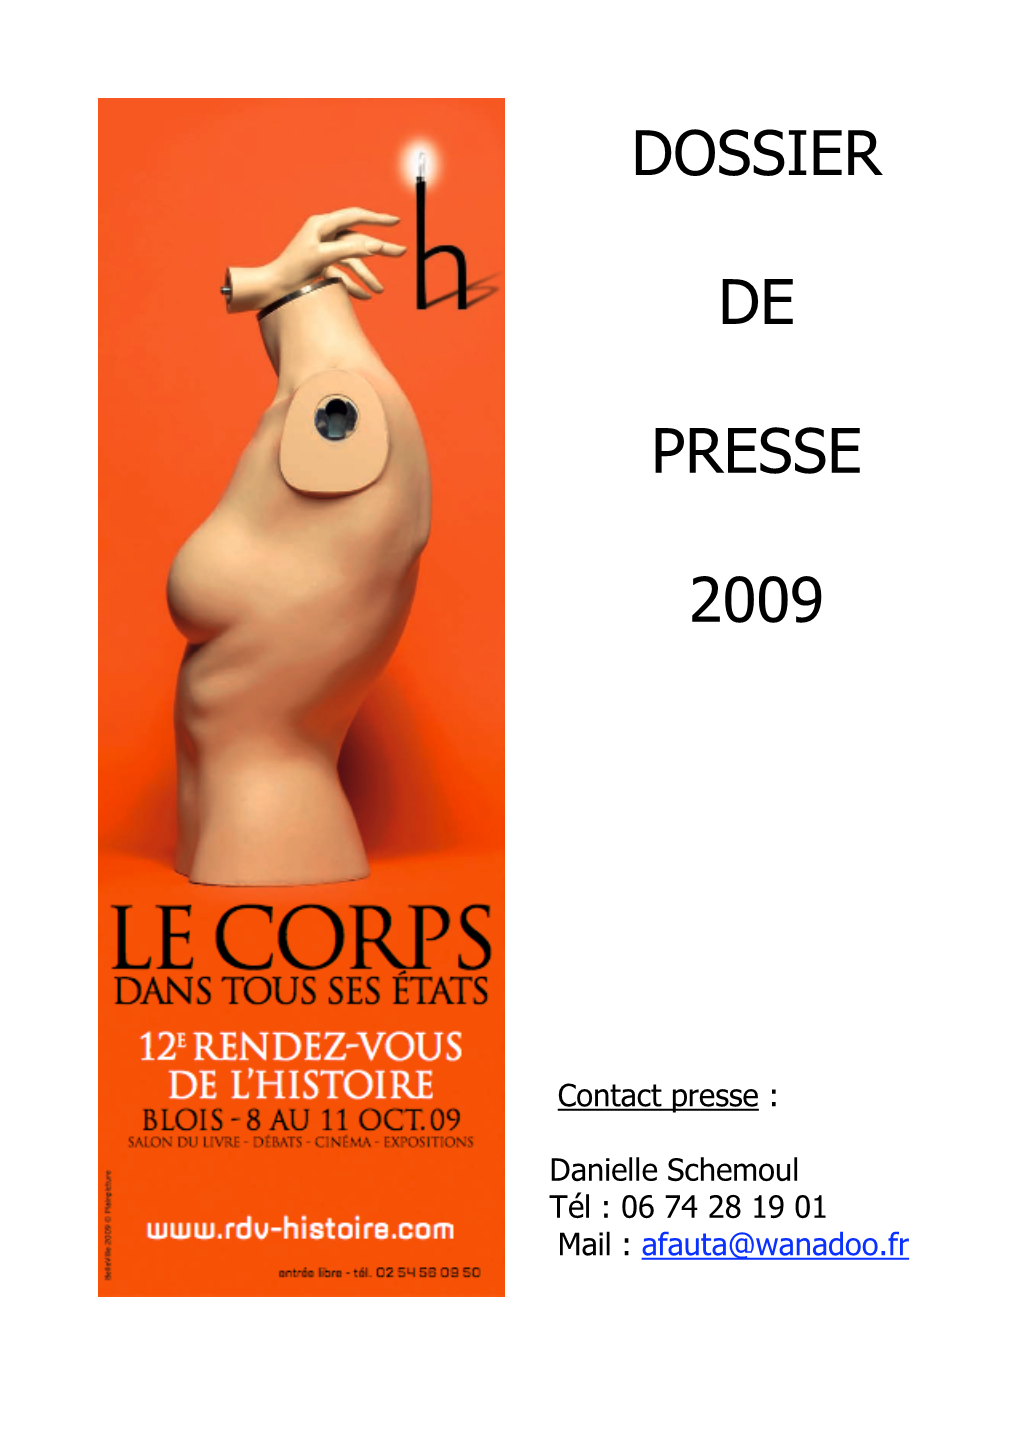 Dossier De Presse 2009